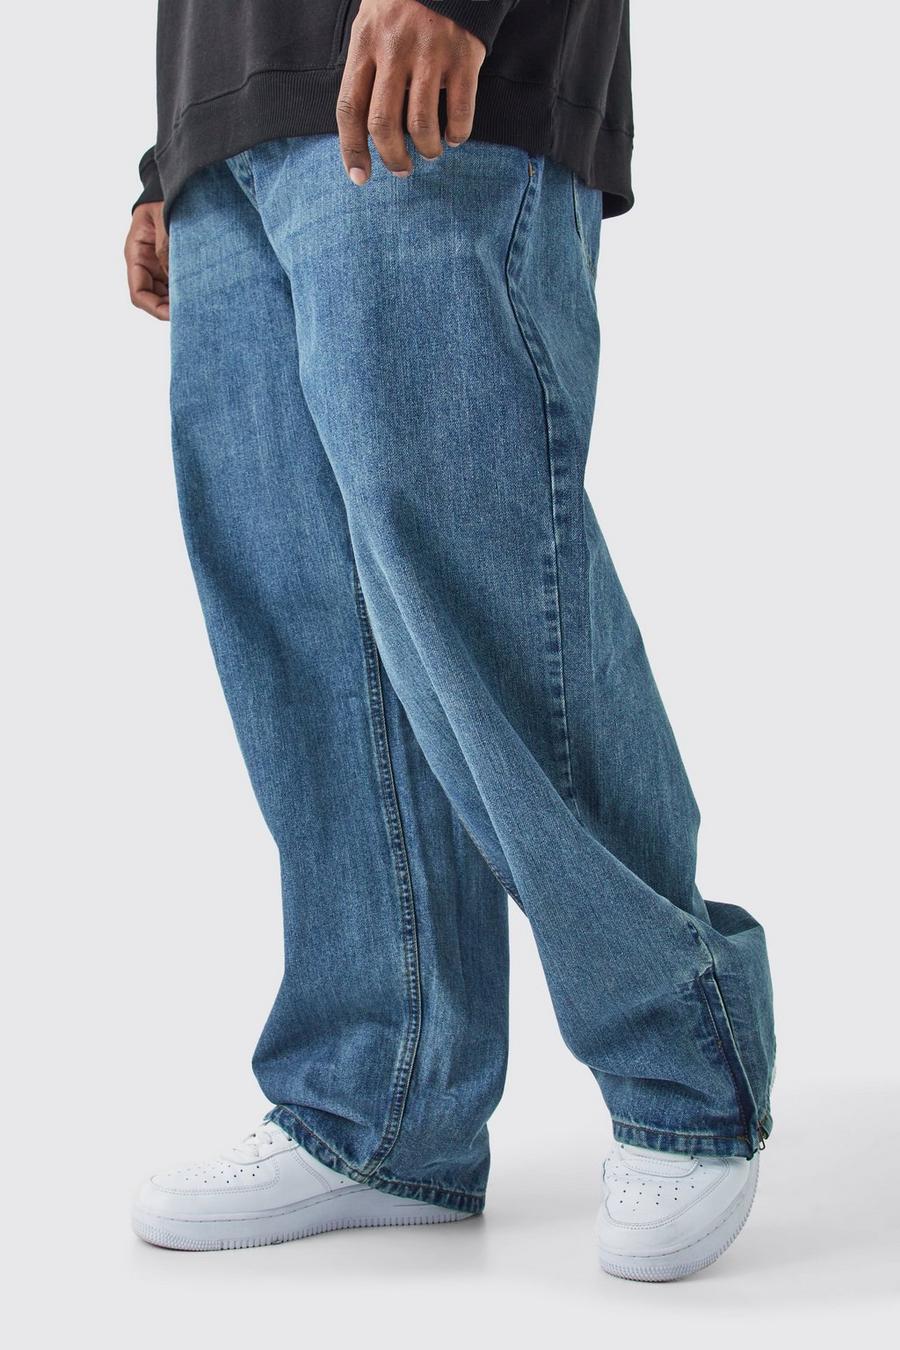 Jeans rilassati Plus Size in denim rigido con zip sul fondo, Antique blue